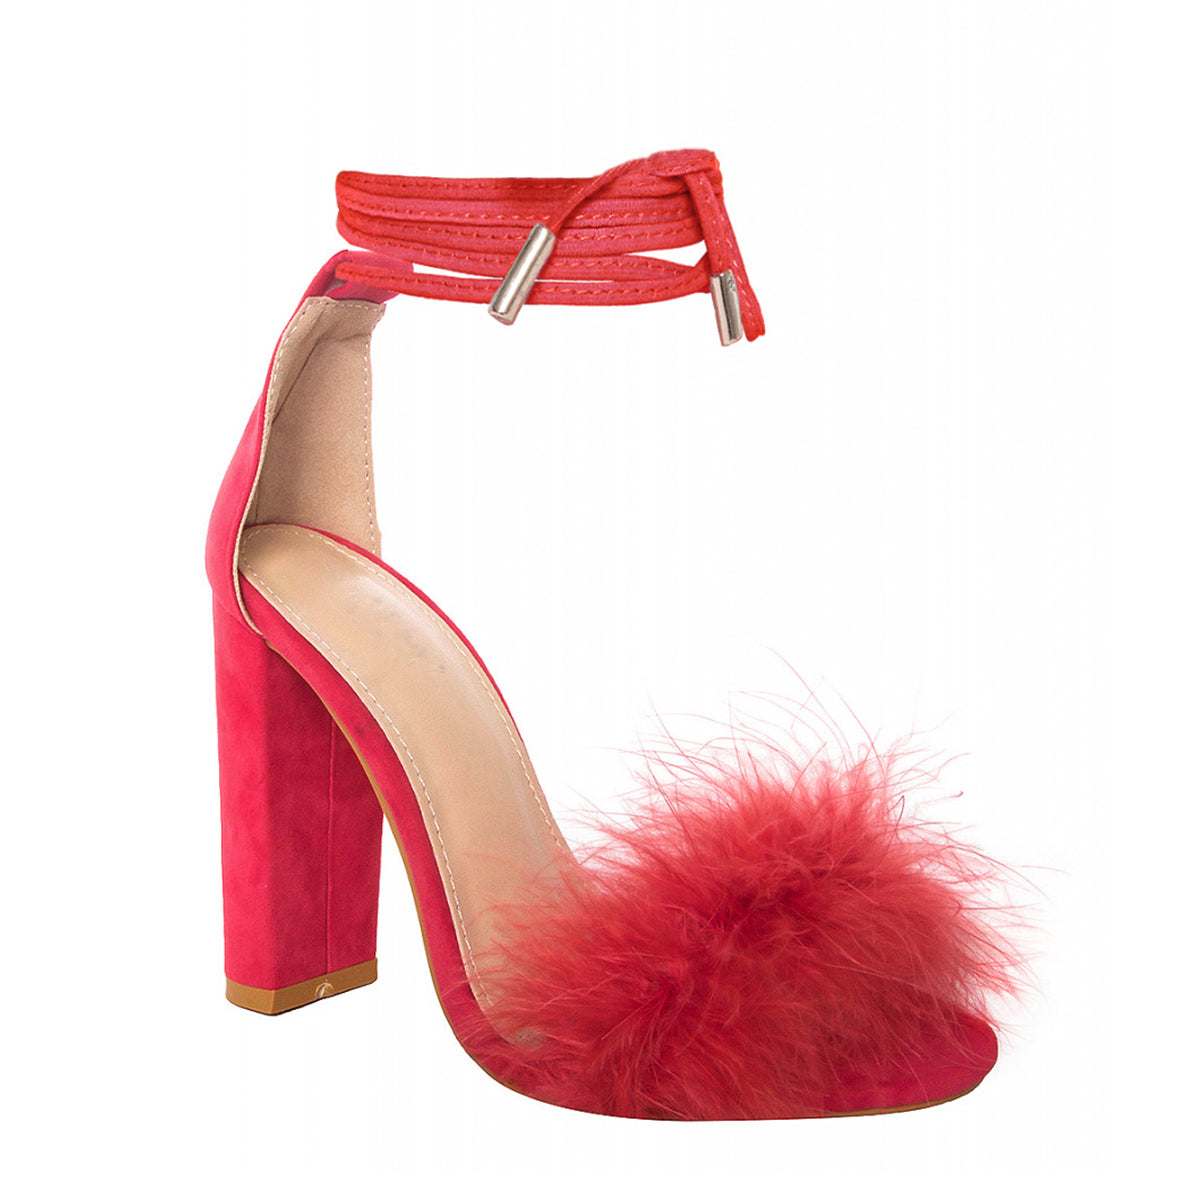 Fur Ball Fluffy Red Block Heels 